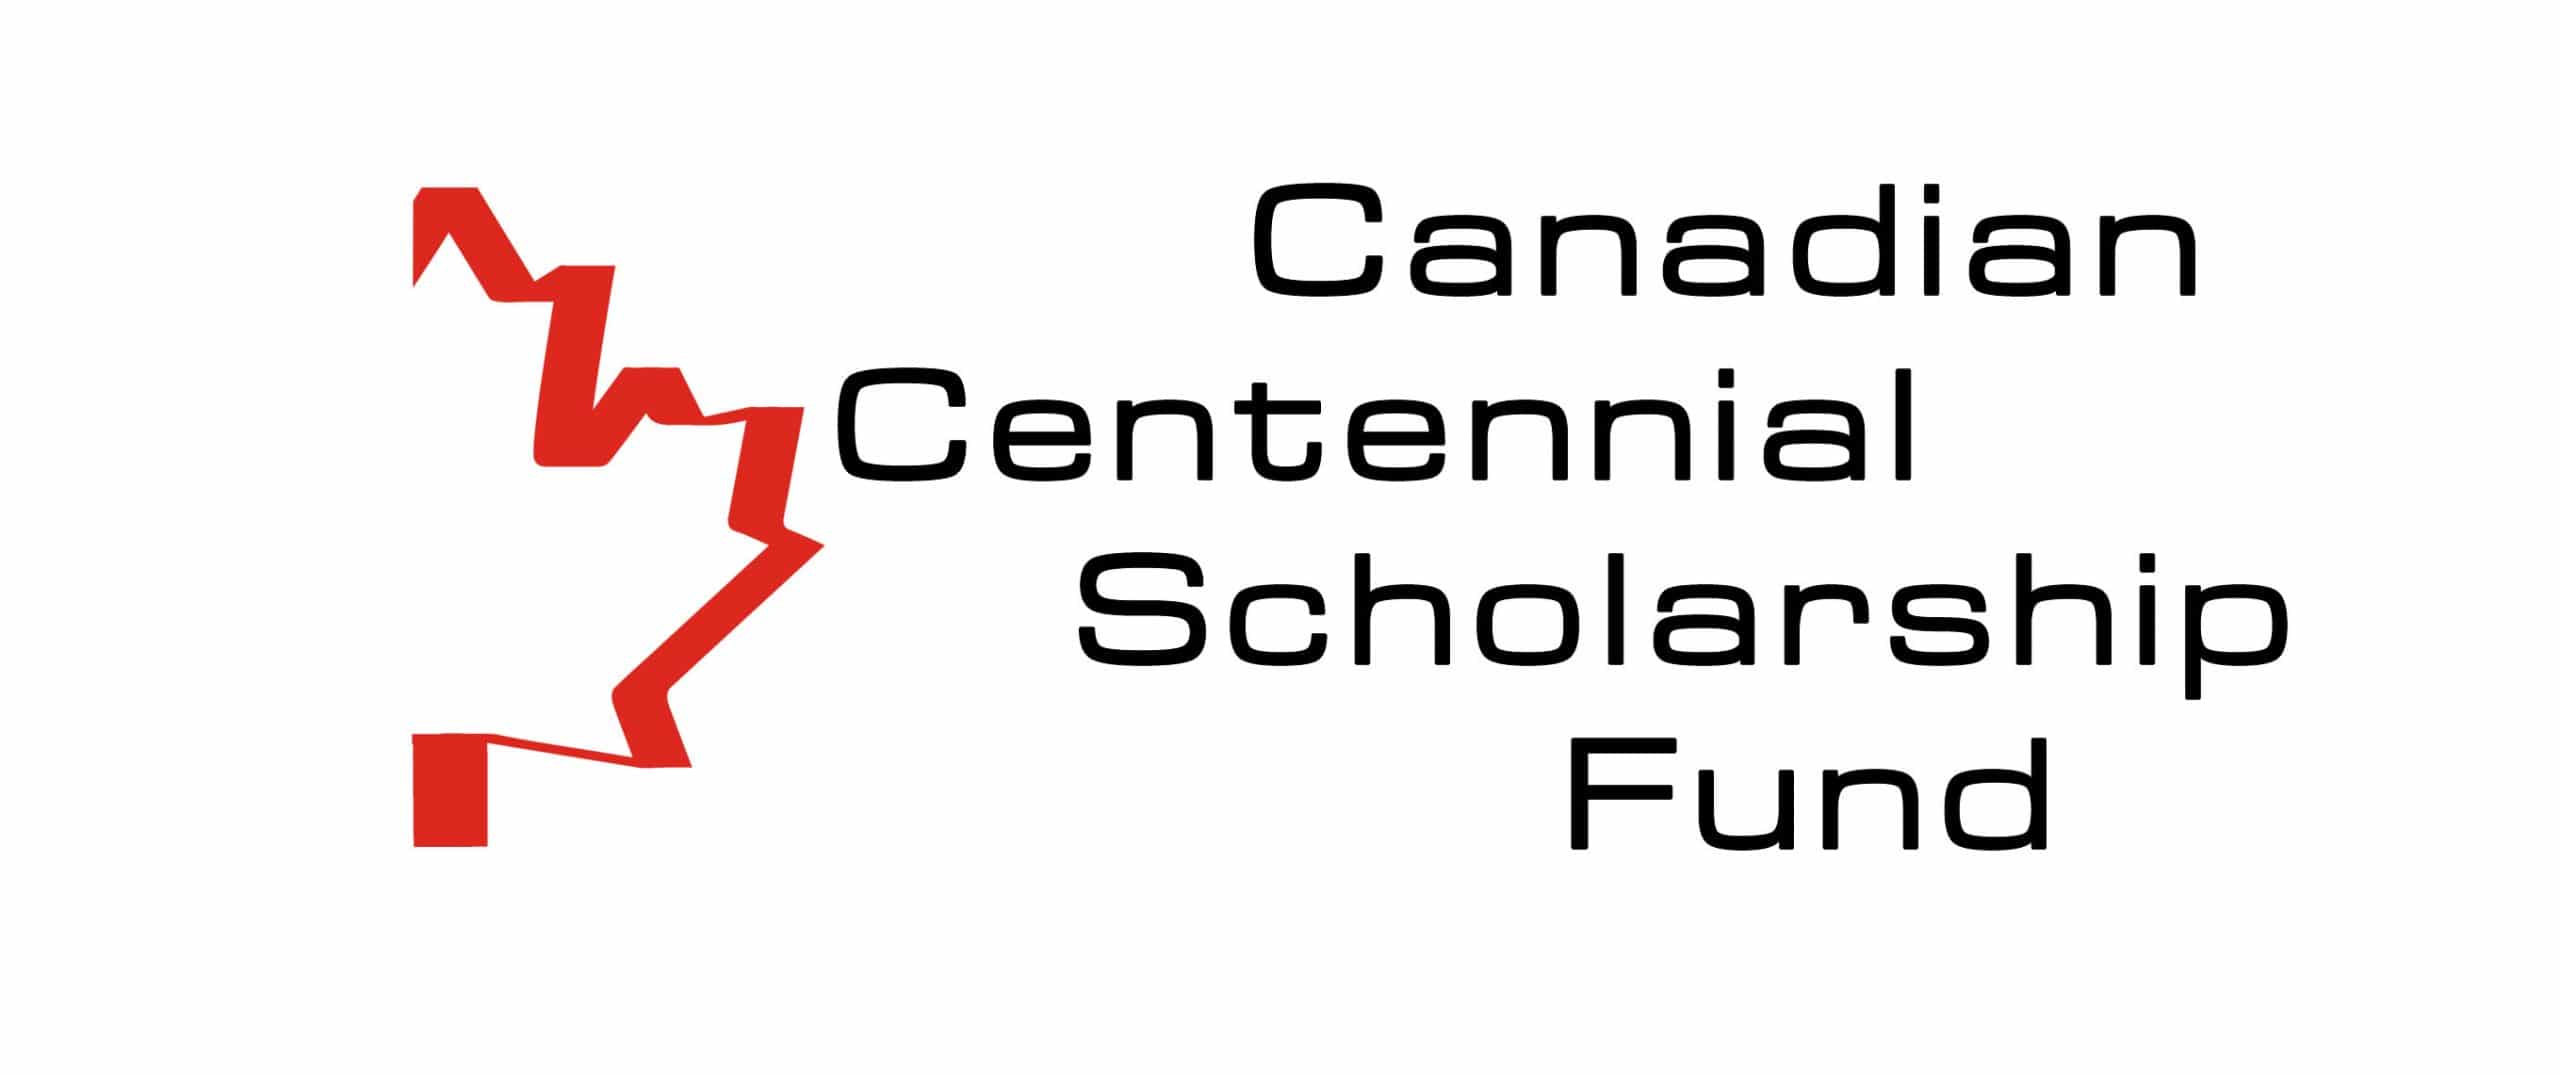 Canadian Centennial Scholarship Fund